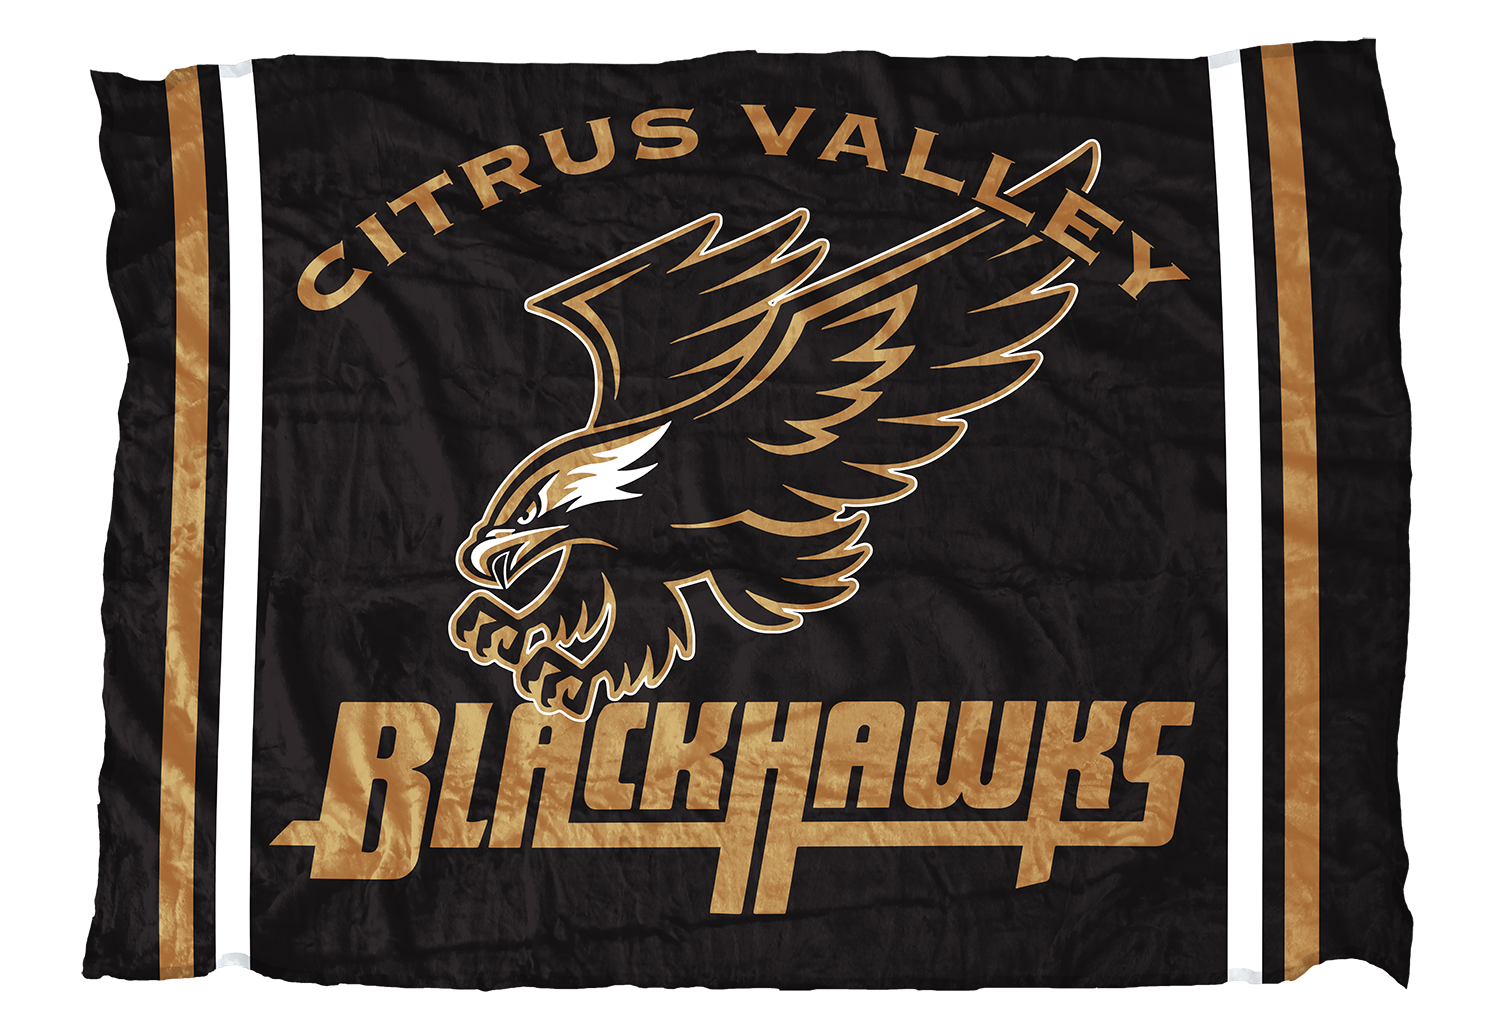 Citrus Valley Black Hawks